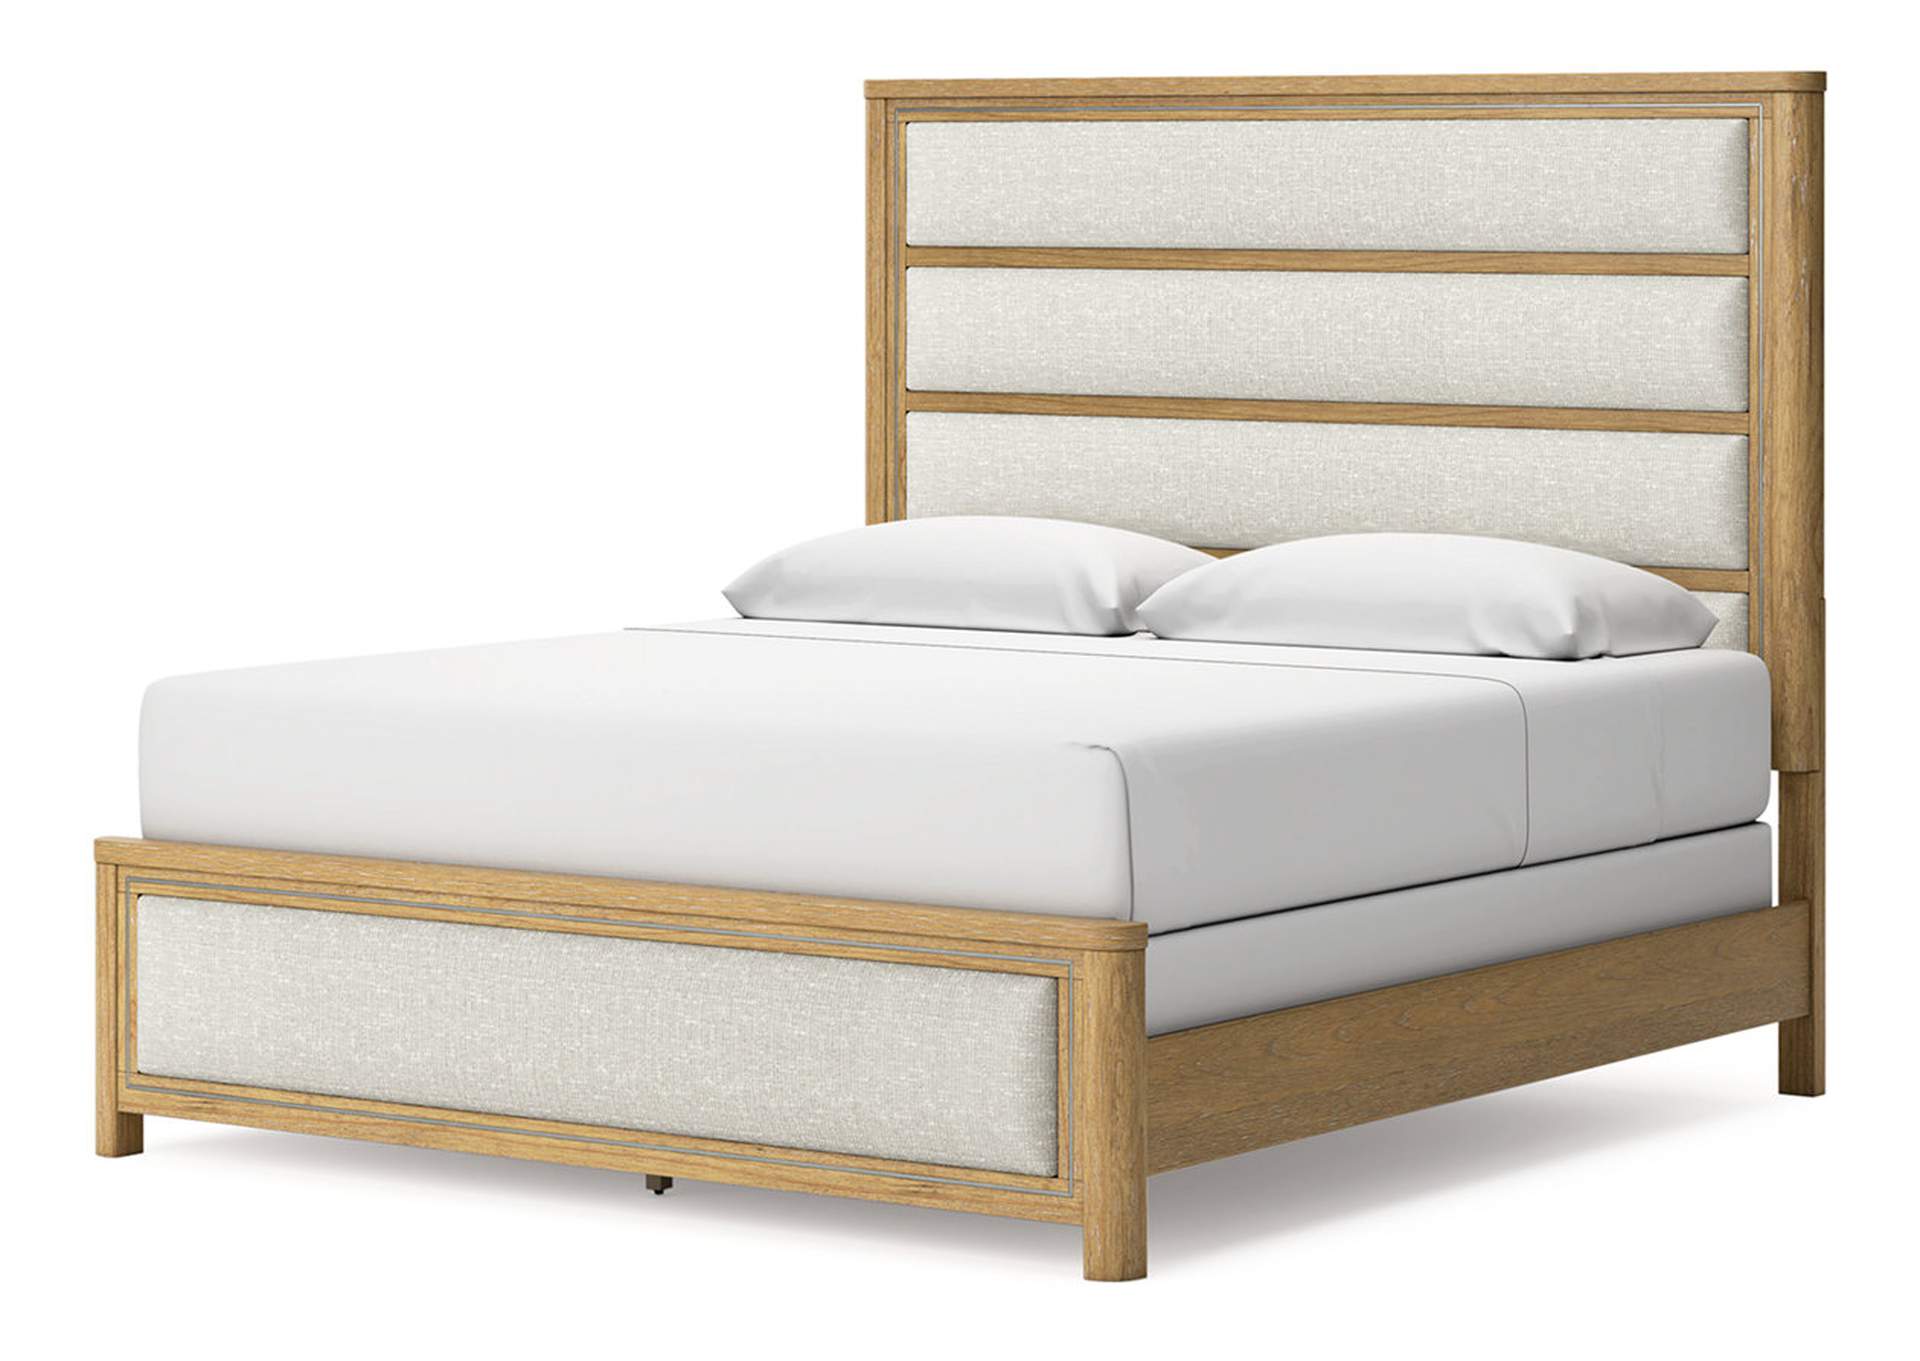 Rencott King Upholstered Bed,Ashley